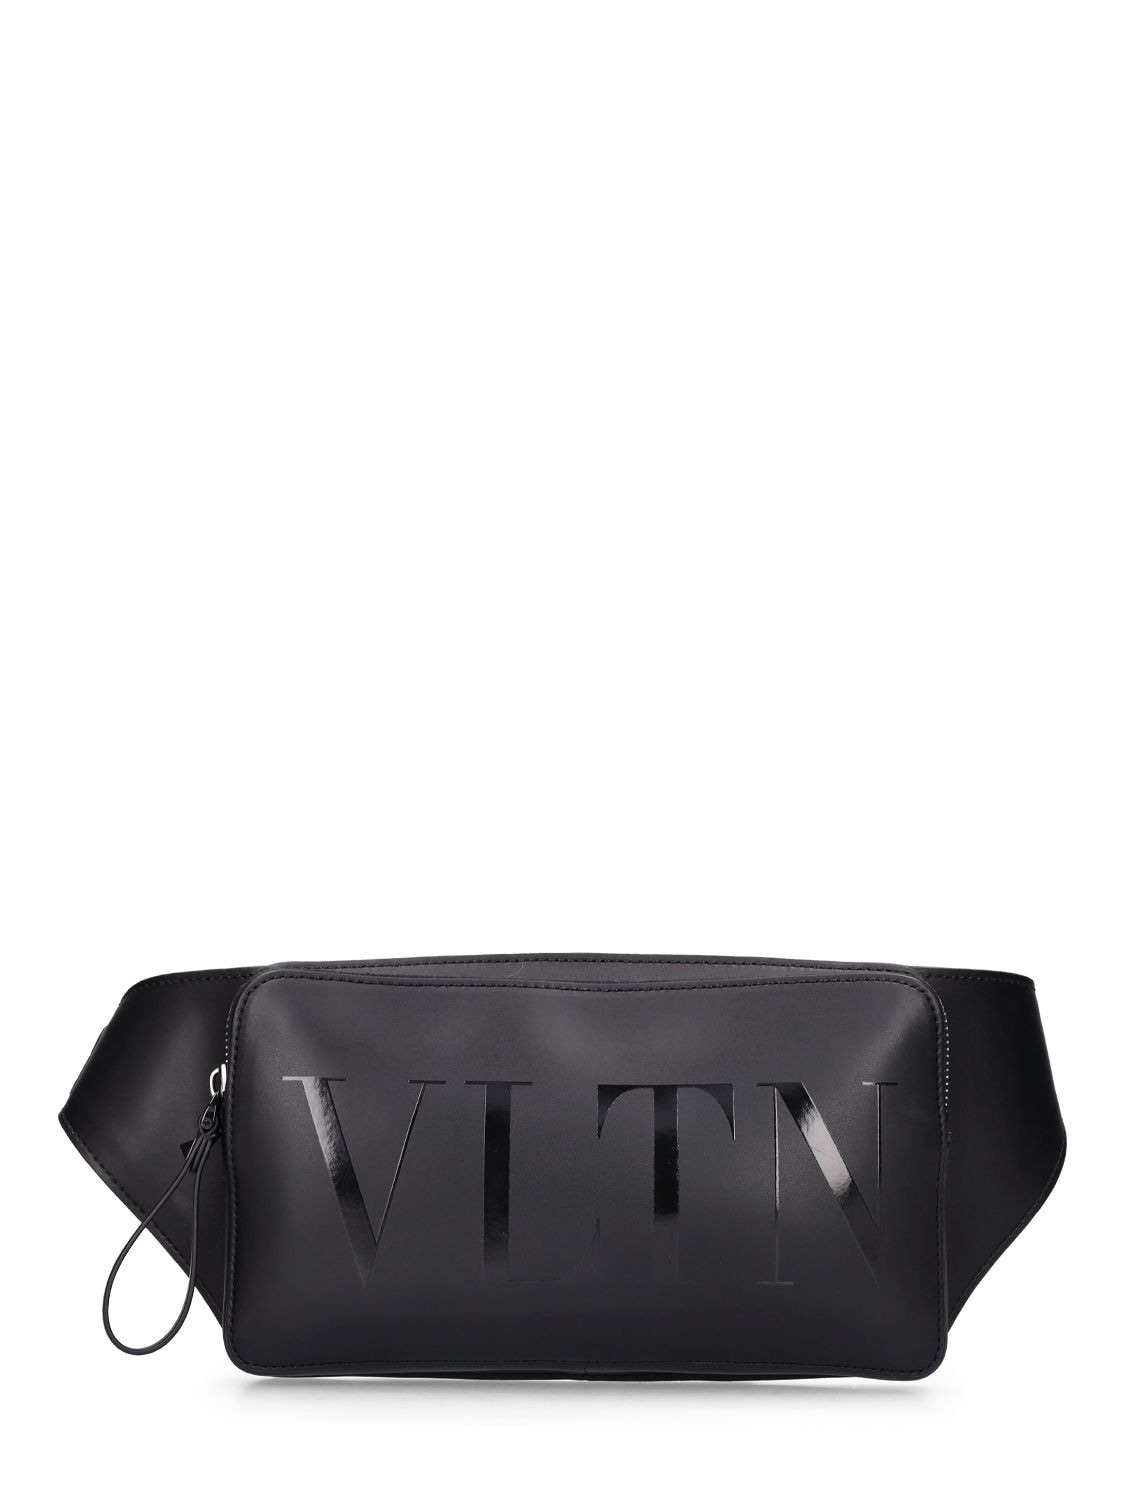 Valentino Garavani Vltn Leather Belt Bag In Black